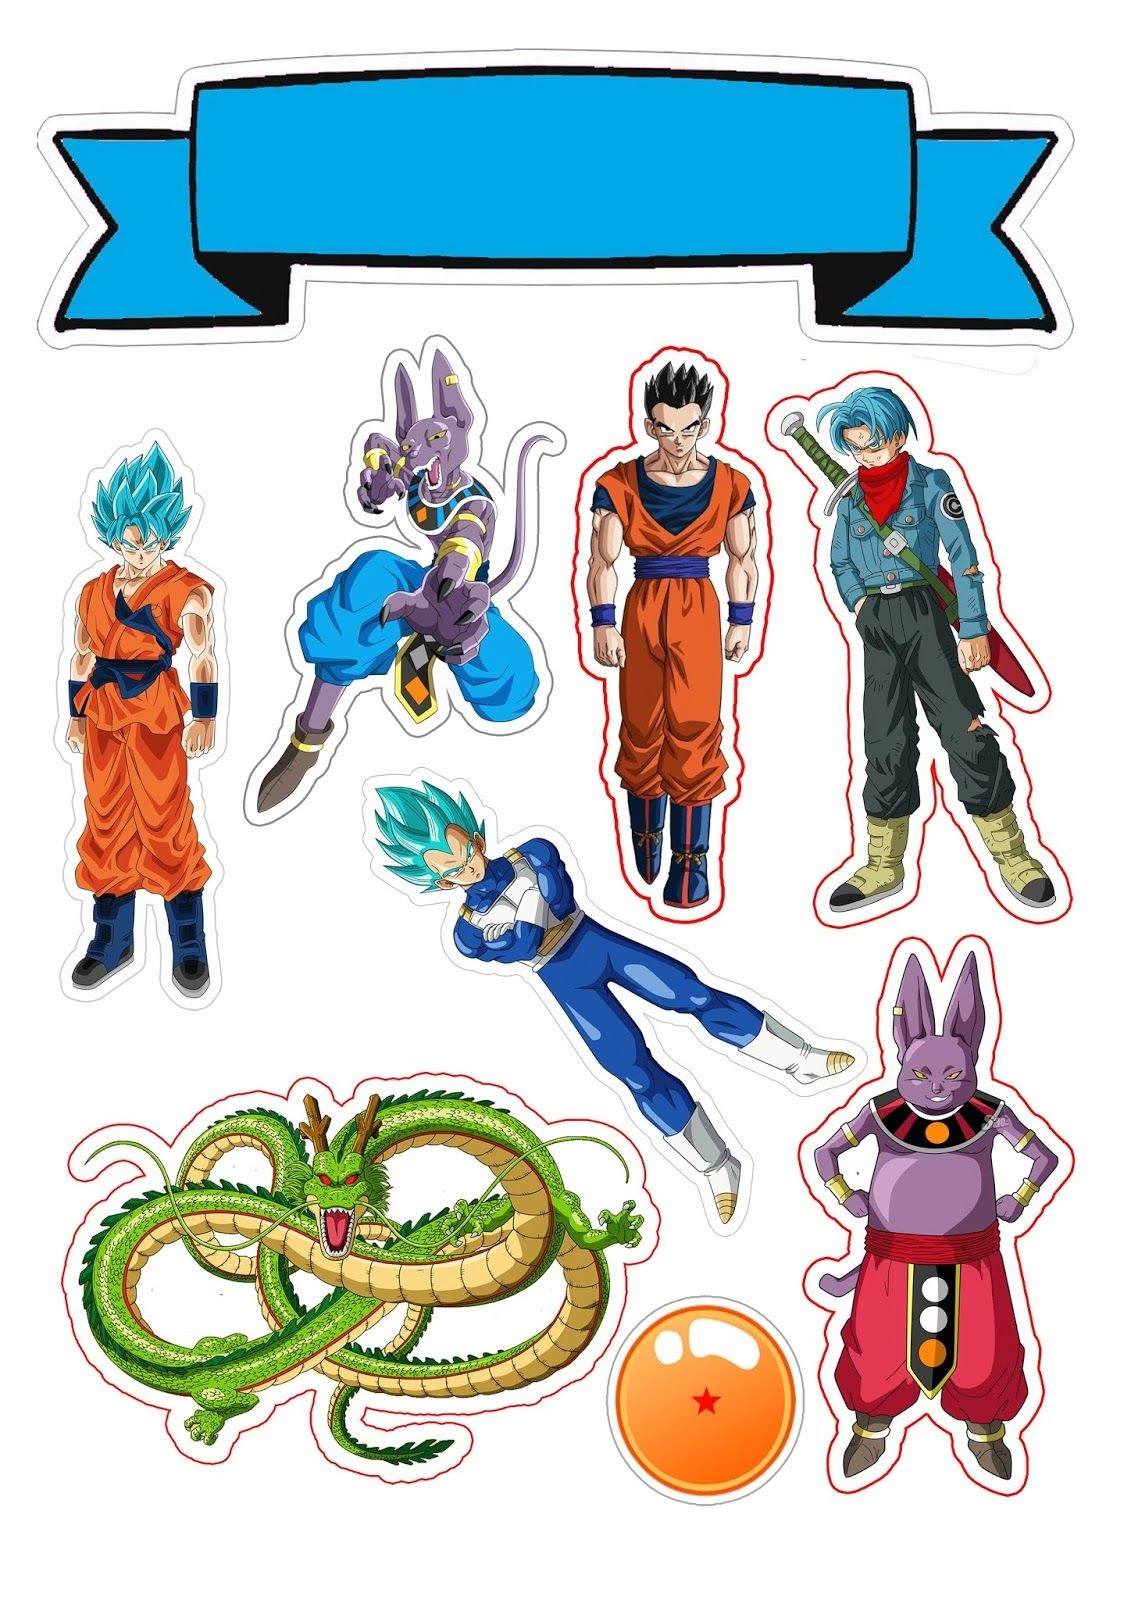 Dragon Ball Z Free Printable Cake And Cupcake Toppers Oh My Fiesta For Geeks Pi ata De Goku Pasteles De Goku Cumplea os De Drag n